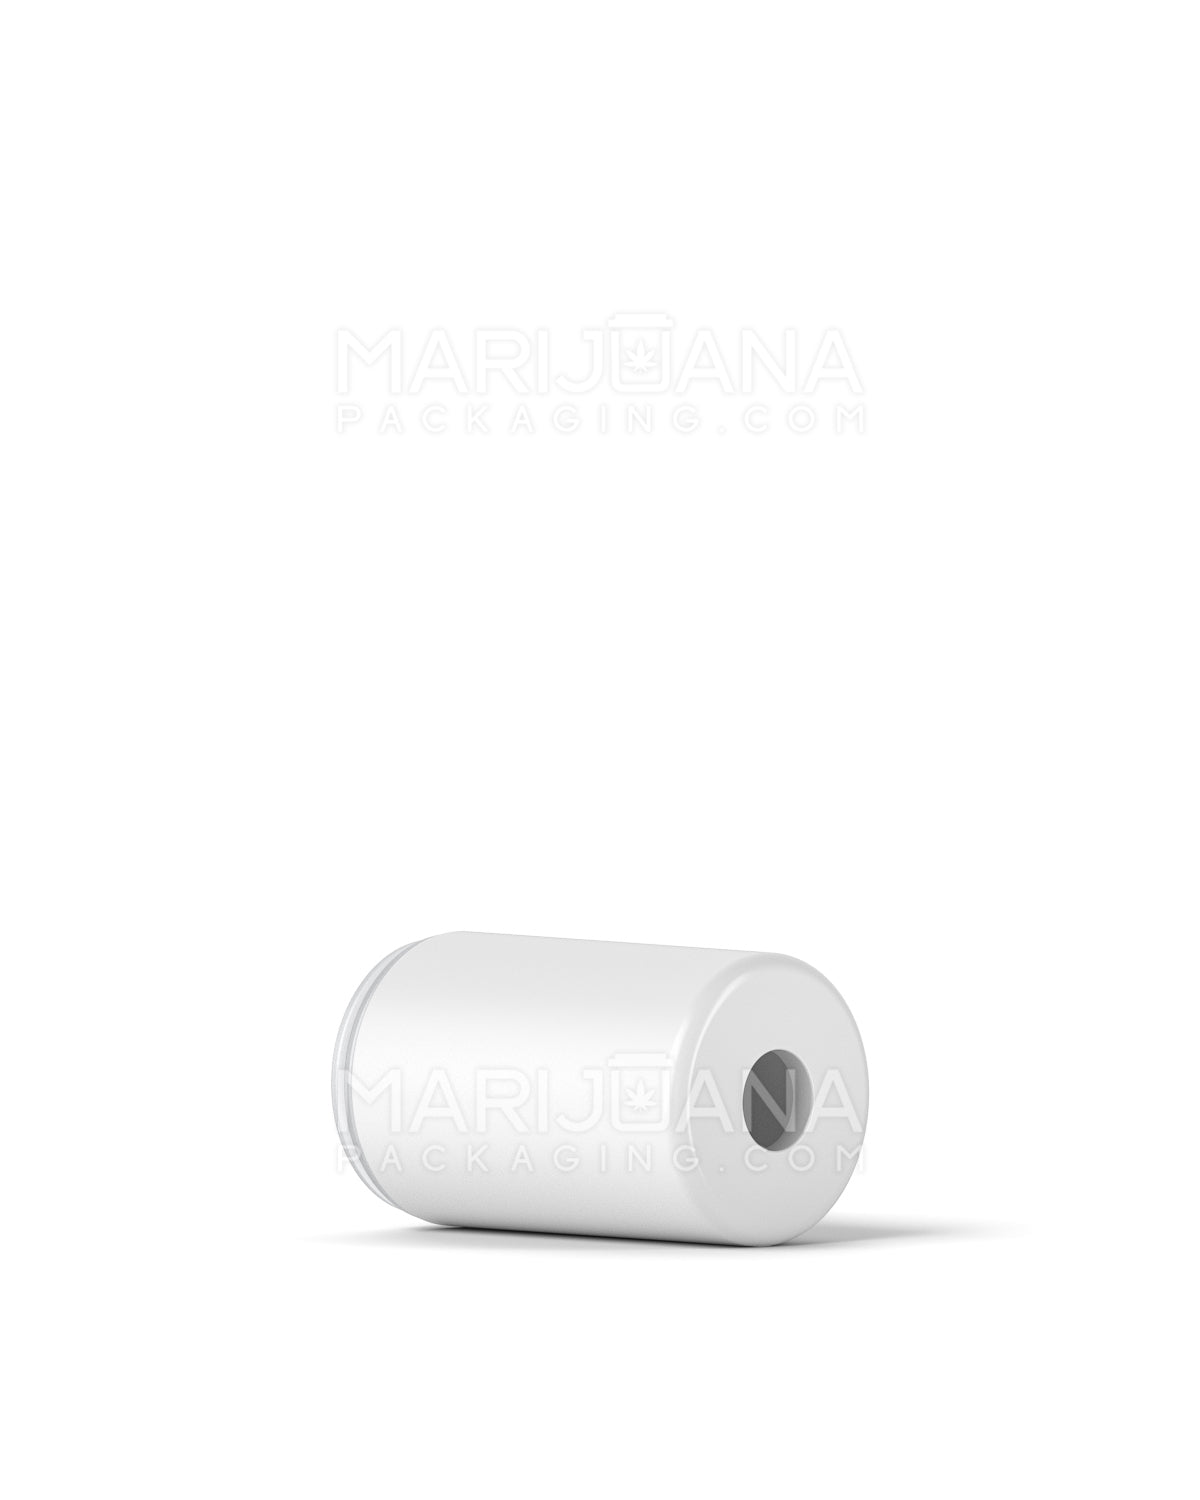 AVD | Barrel Vape Mouthpiece for Glass Cartridges | White Plastic - Eazy Press - 600 Count - 5